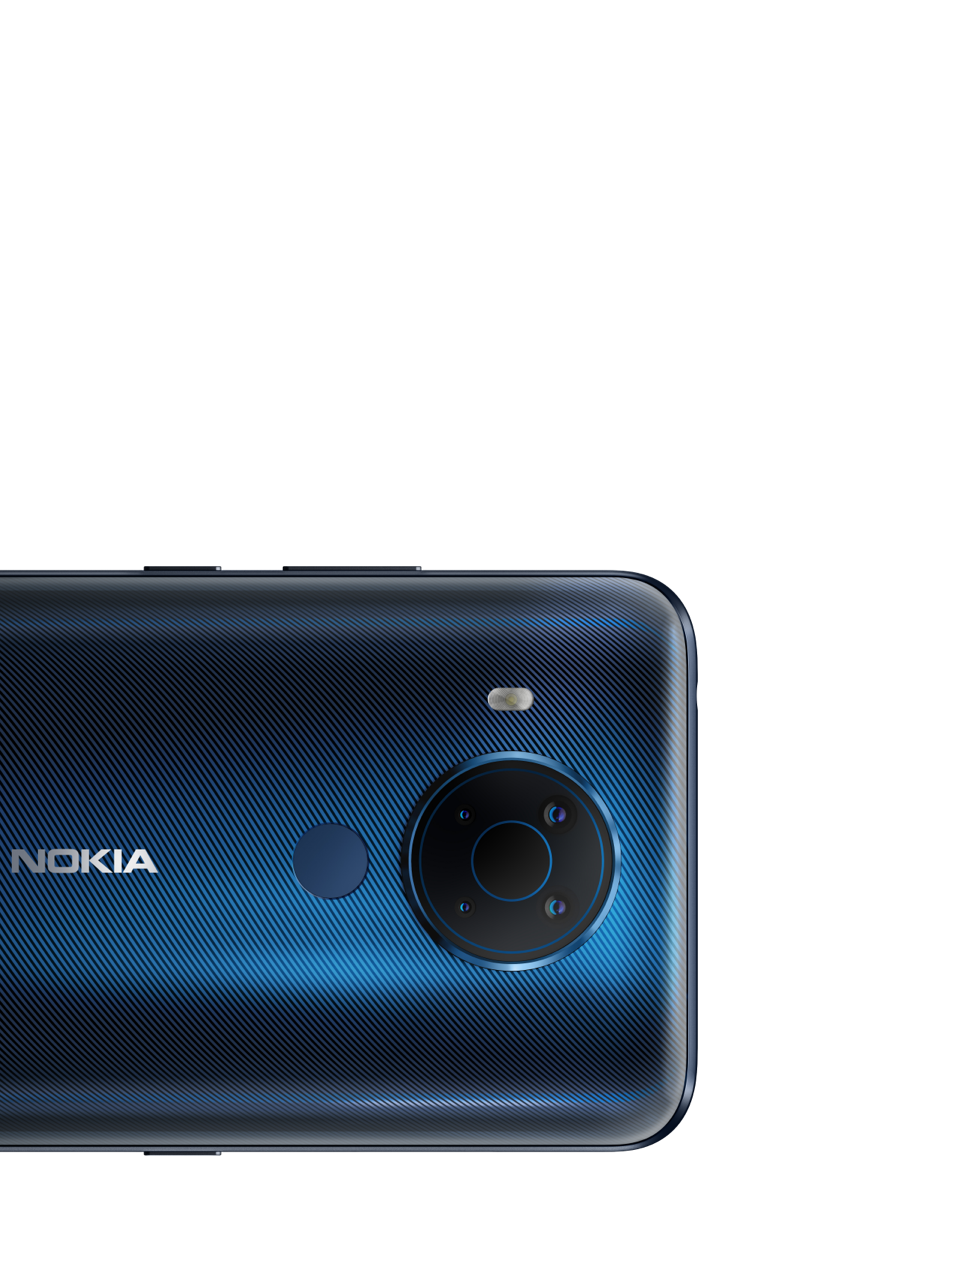 Nokia 5.4 mobile | Nokia phones | International - English